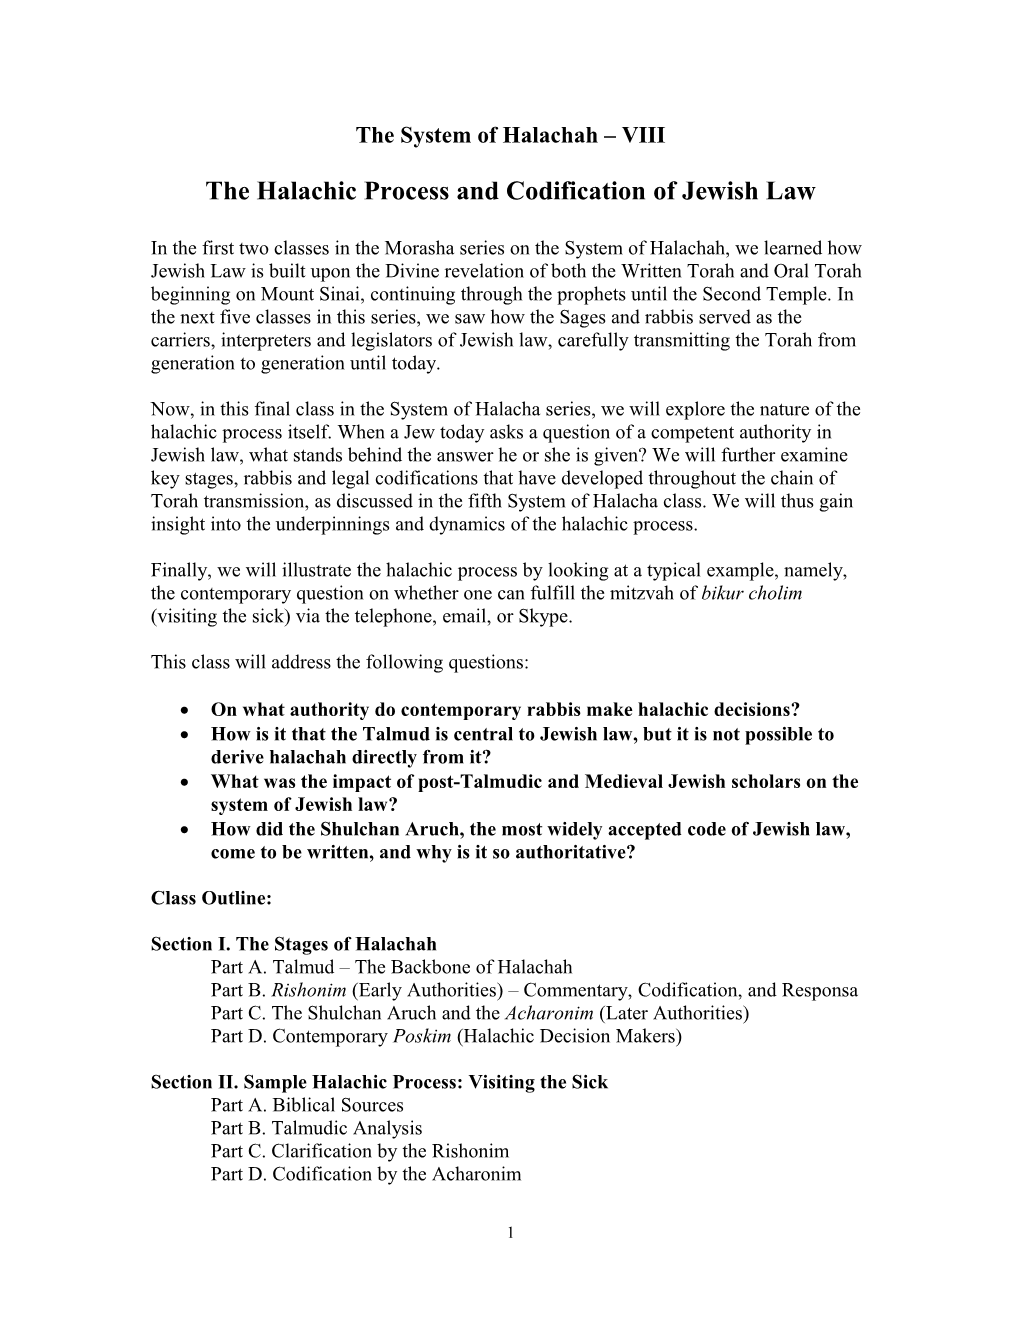 System of Halachah Part VIII: the Halachic Process